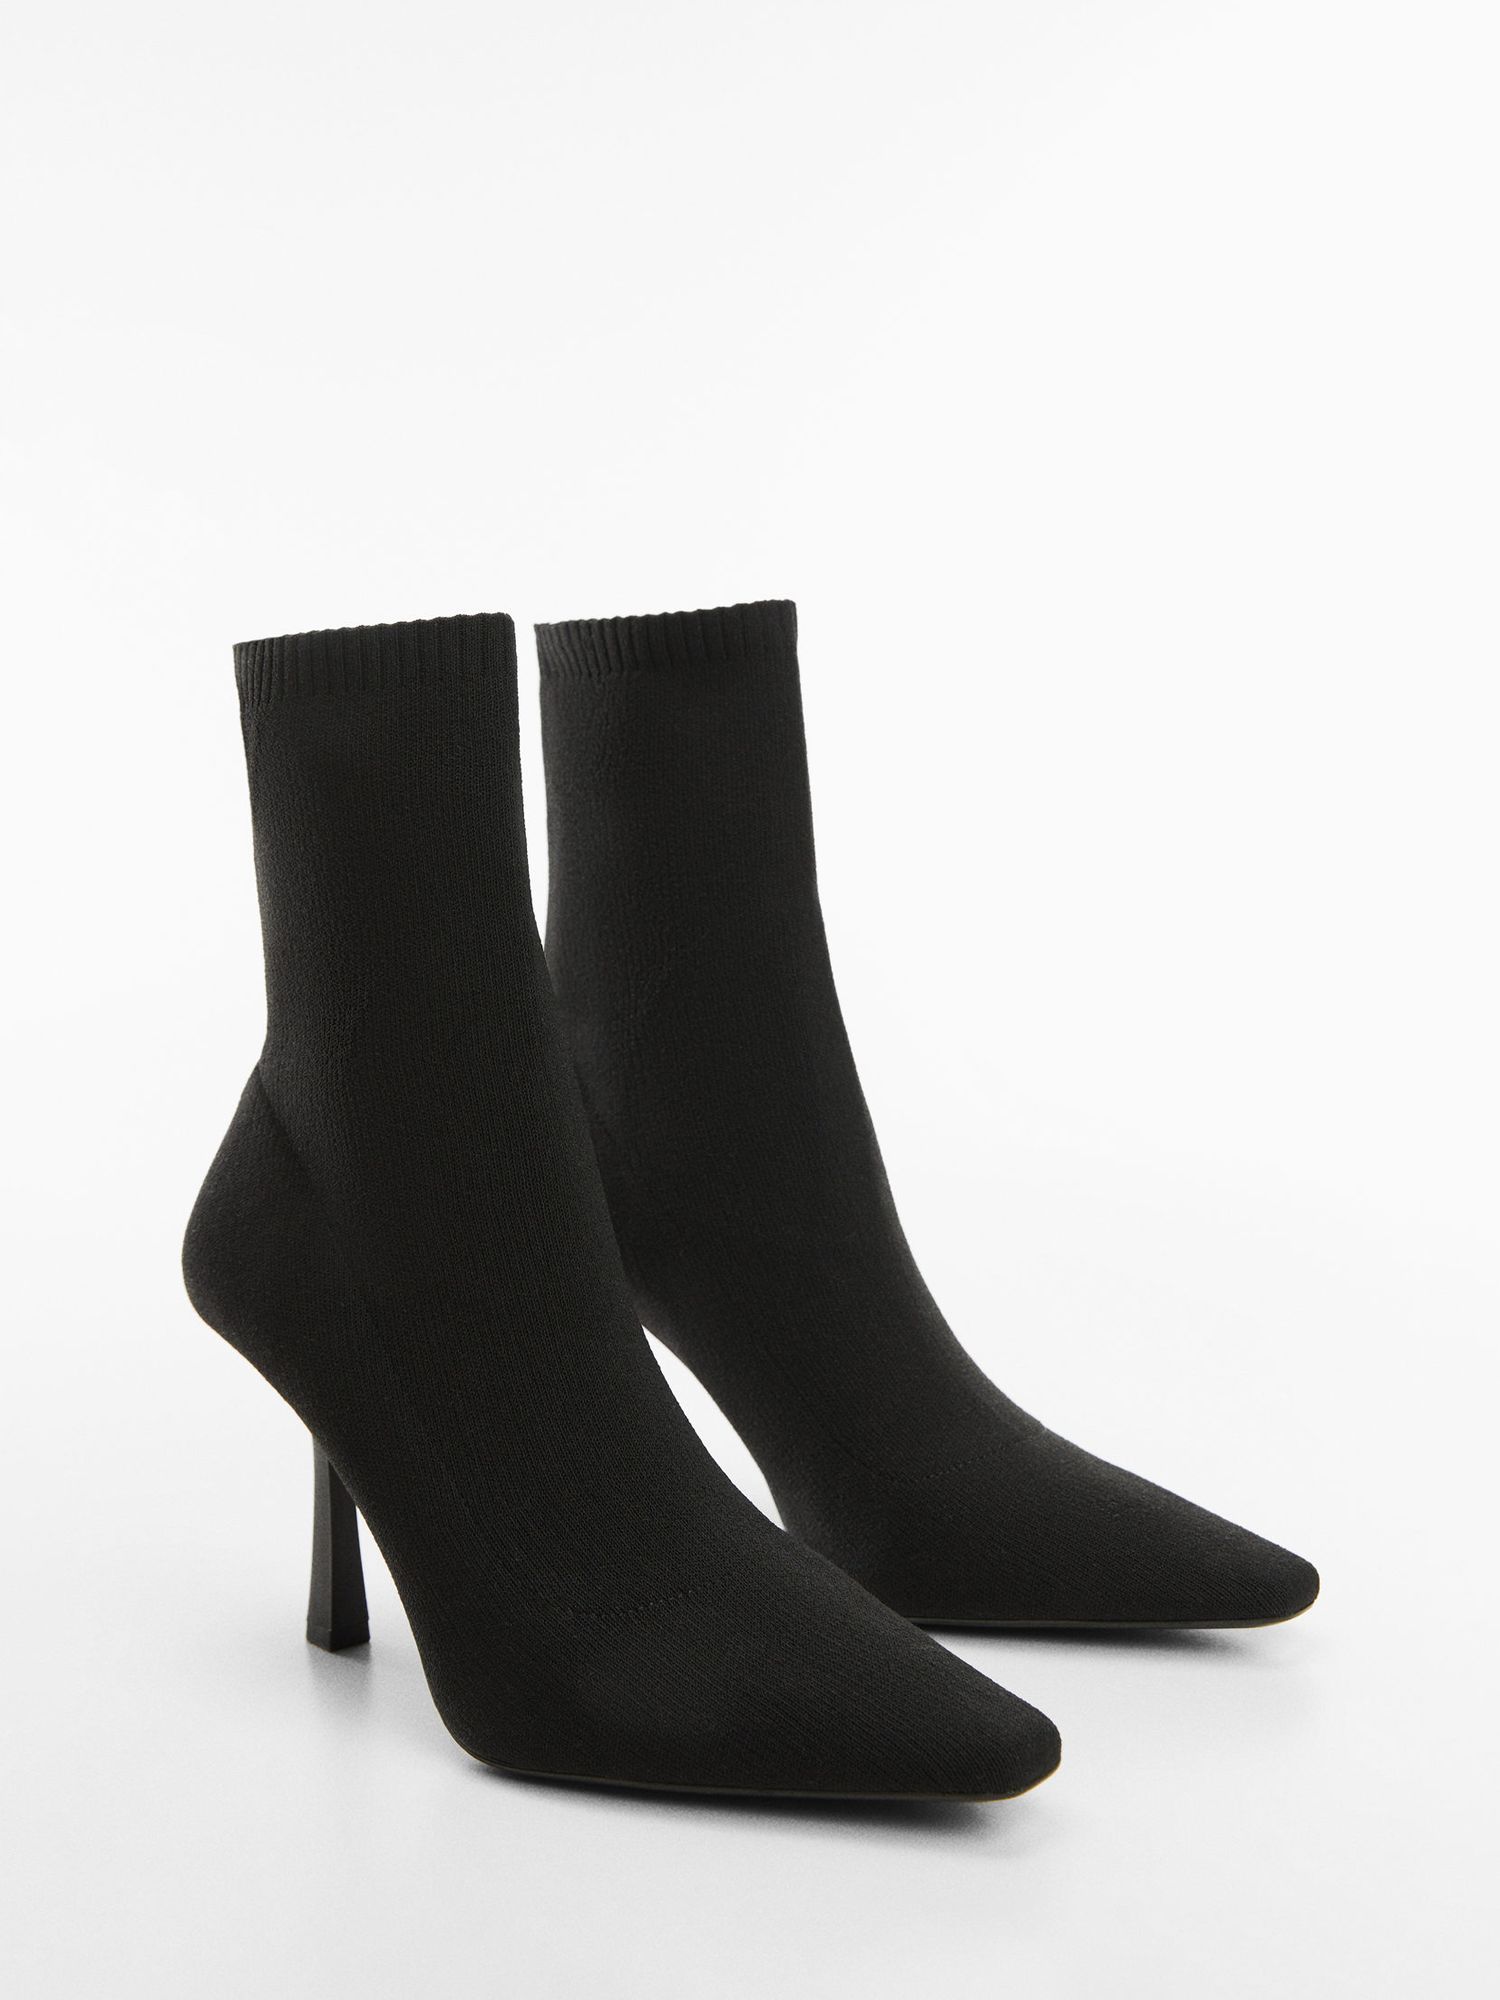 Mango Mirta Heeled Sock Boots, Black at John Lewis & Partners